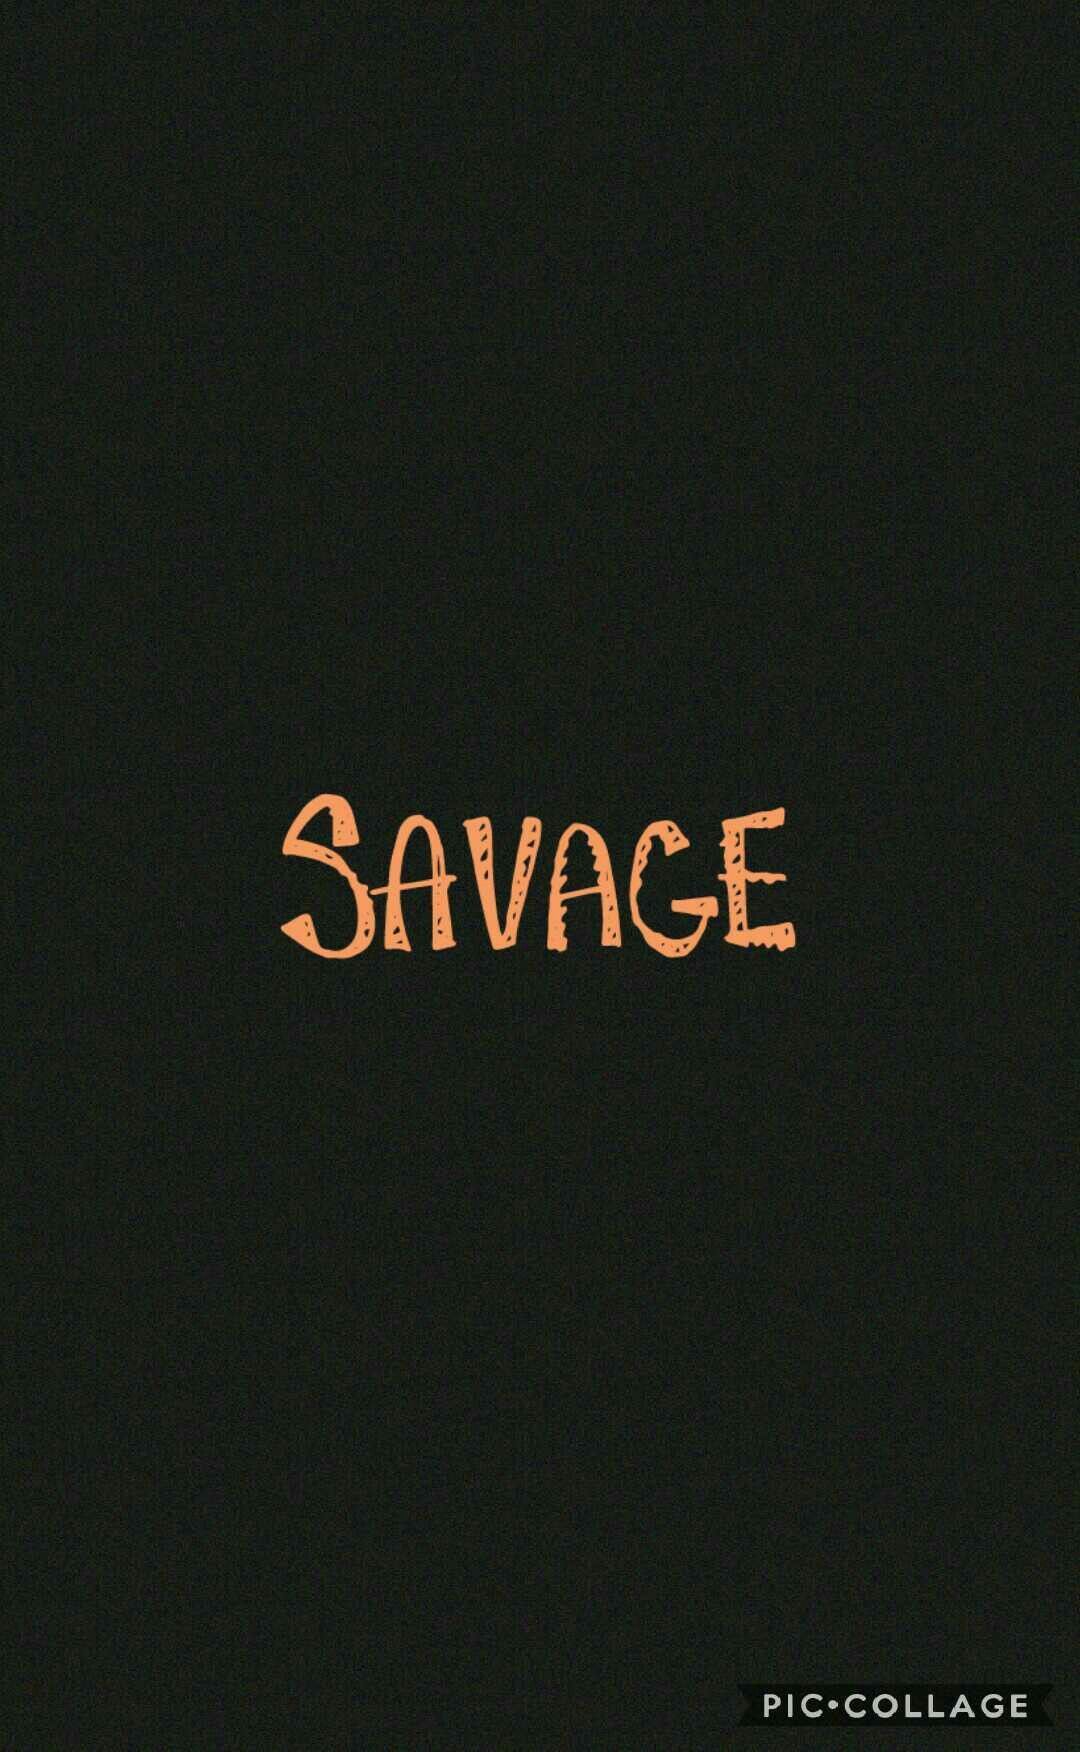 Cute Savage Logo - Savage Orange Black Cute Background Inspired By The Martinez Twins